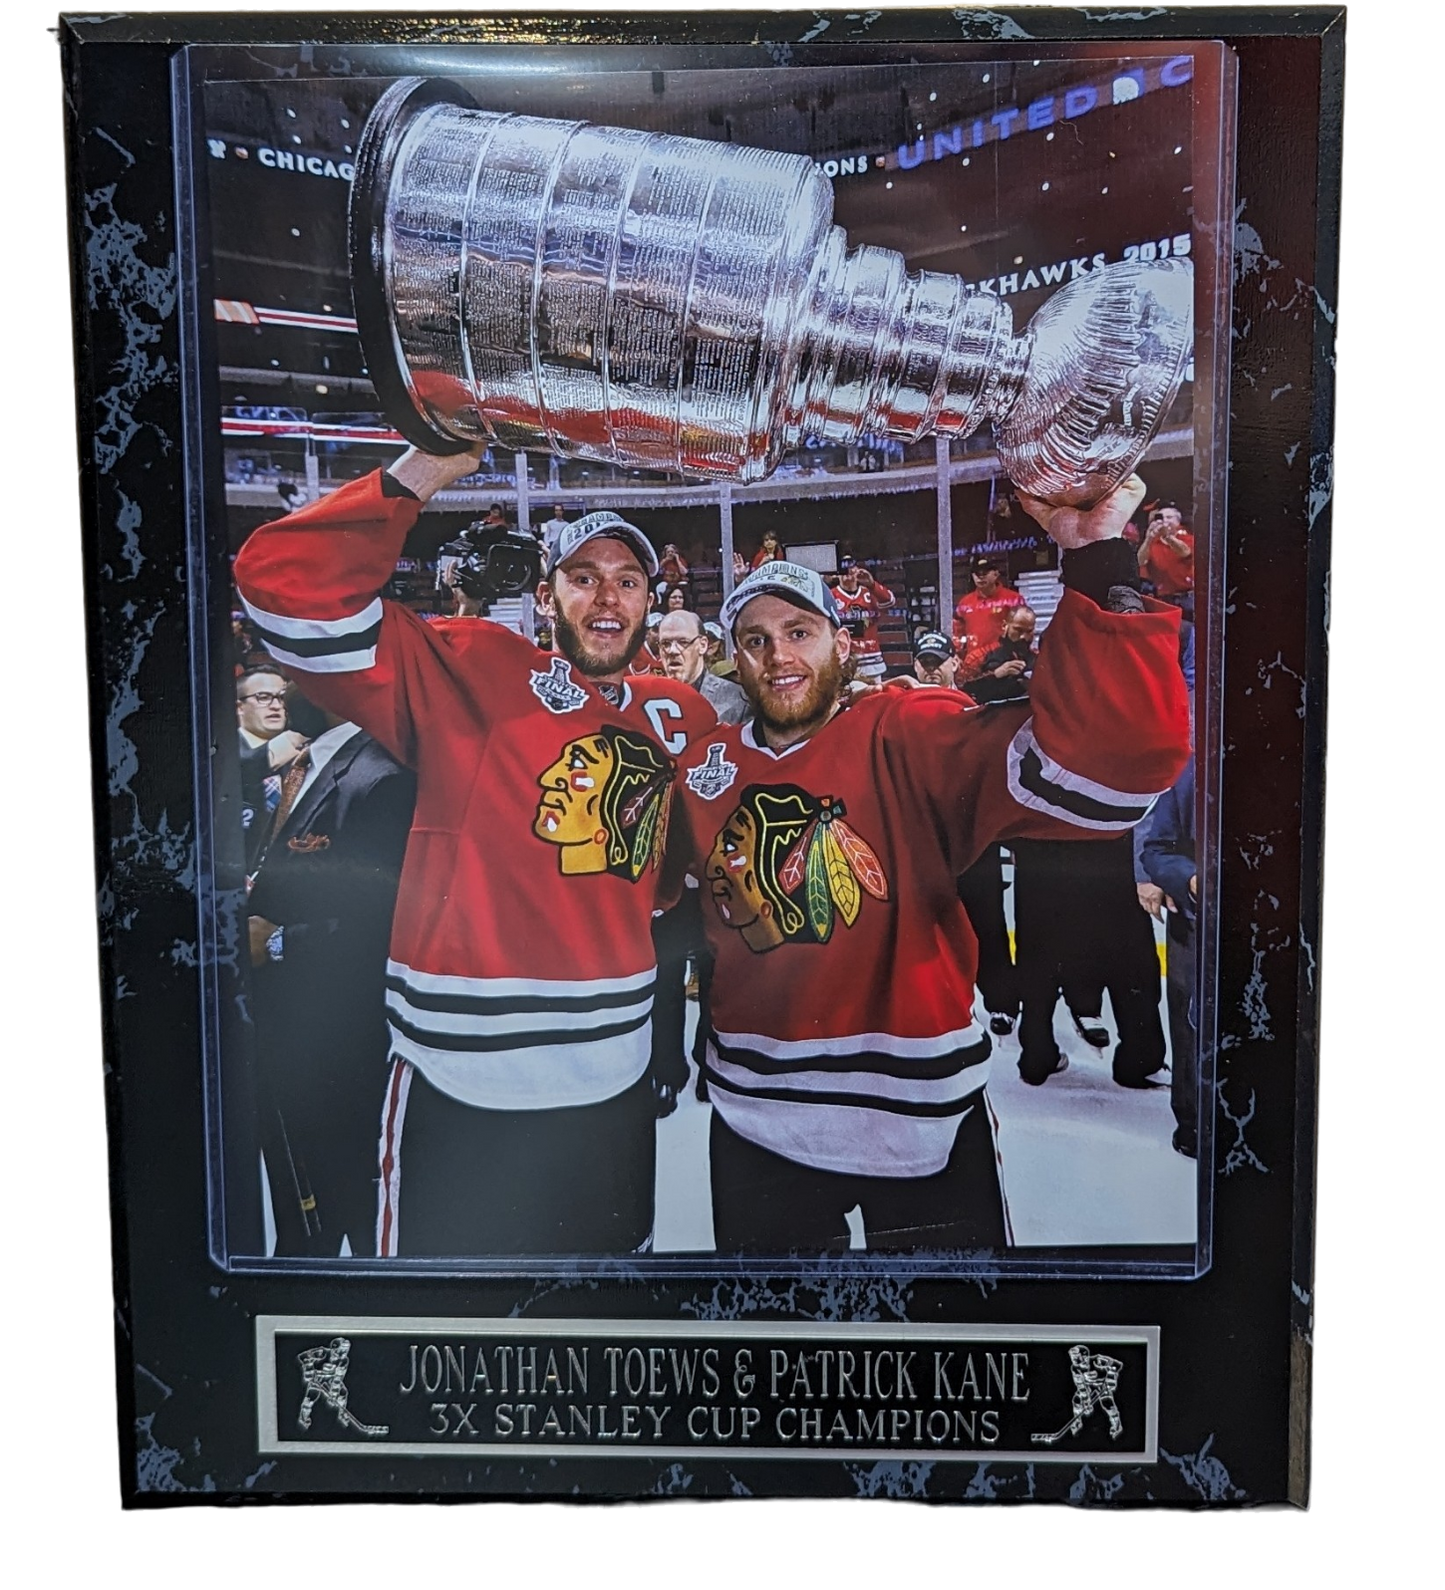 Patrick Kane Jonathan Toews Chicago Blackhawks 2015 Stanley Cup Champions Wall Plaque